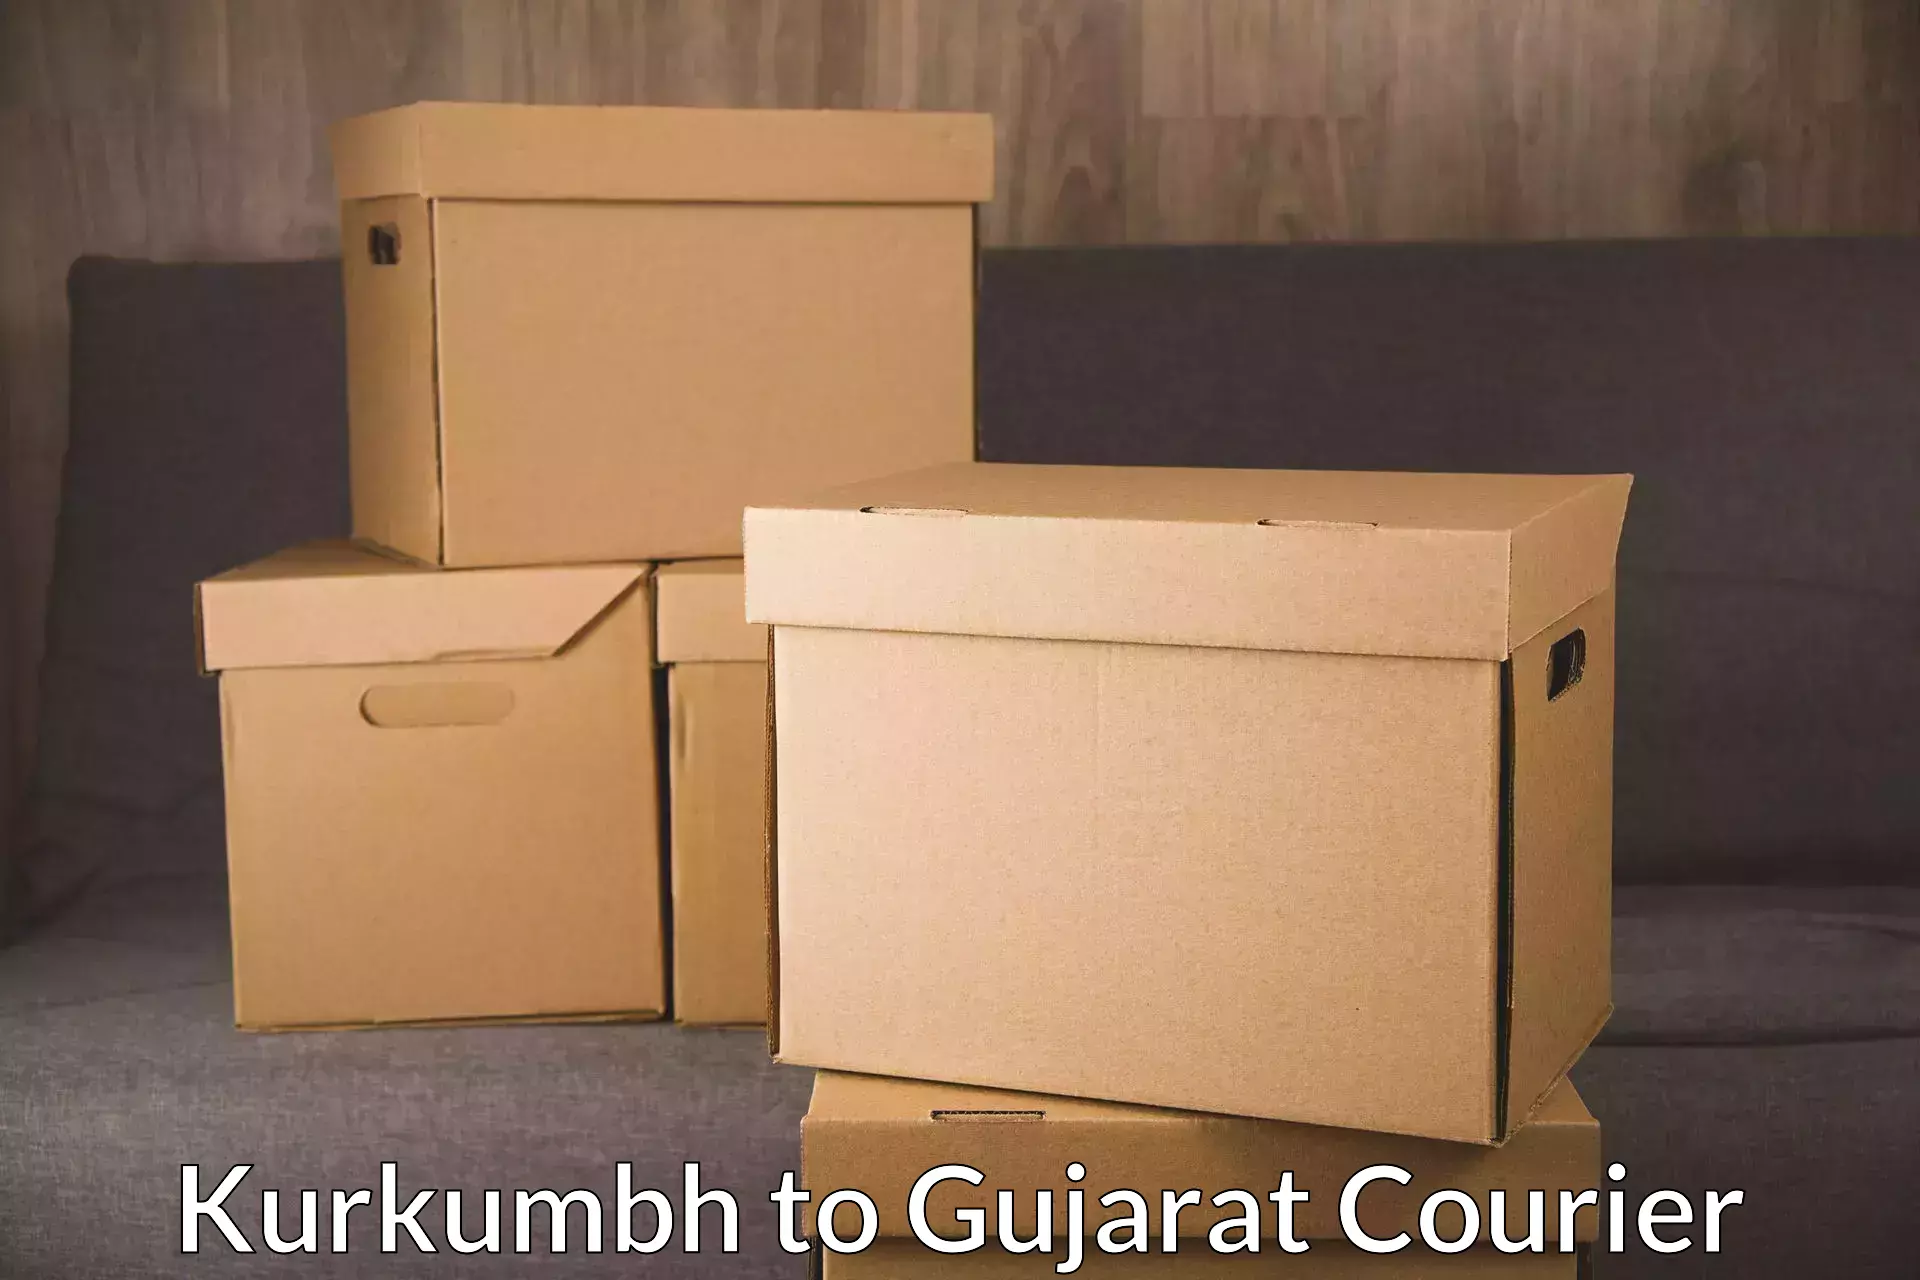 Courier service comparison Kurkumbh to Dahej